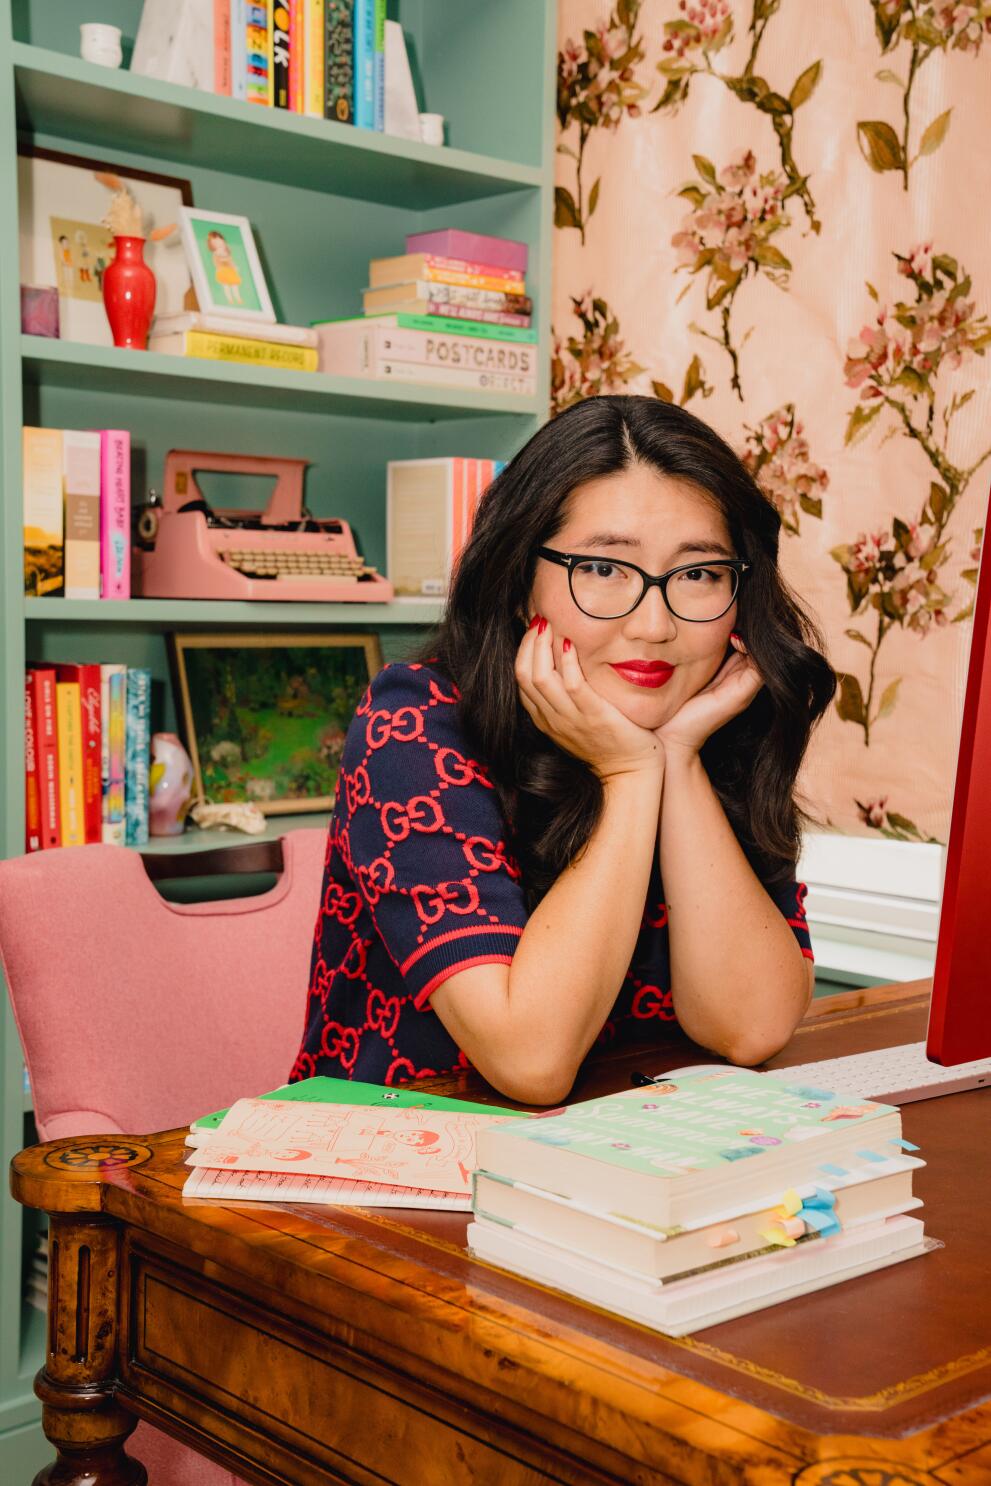 Summer I Turned Pretty': How author Jenny Han built a YA empire